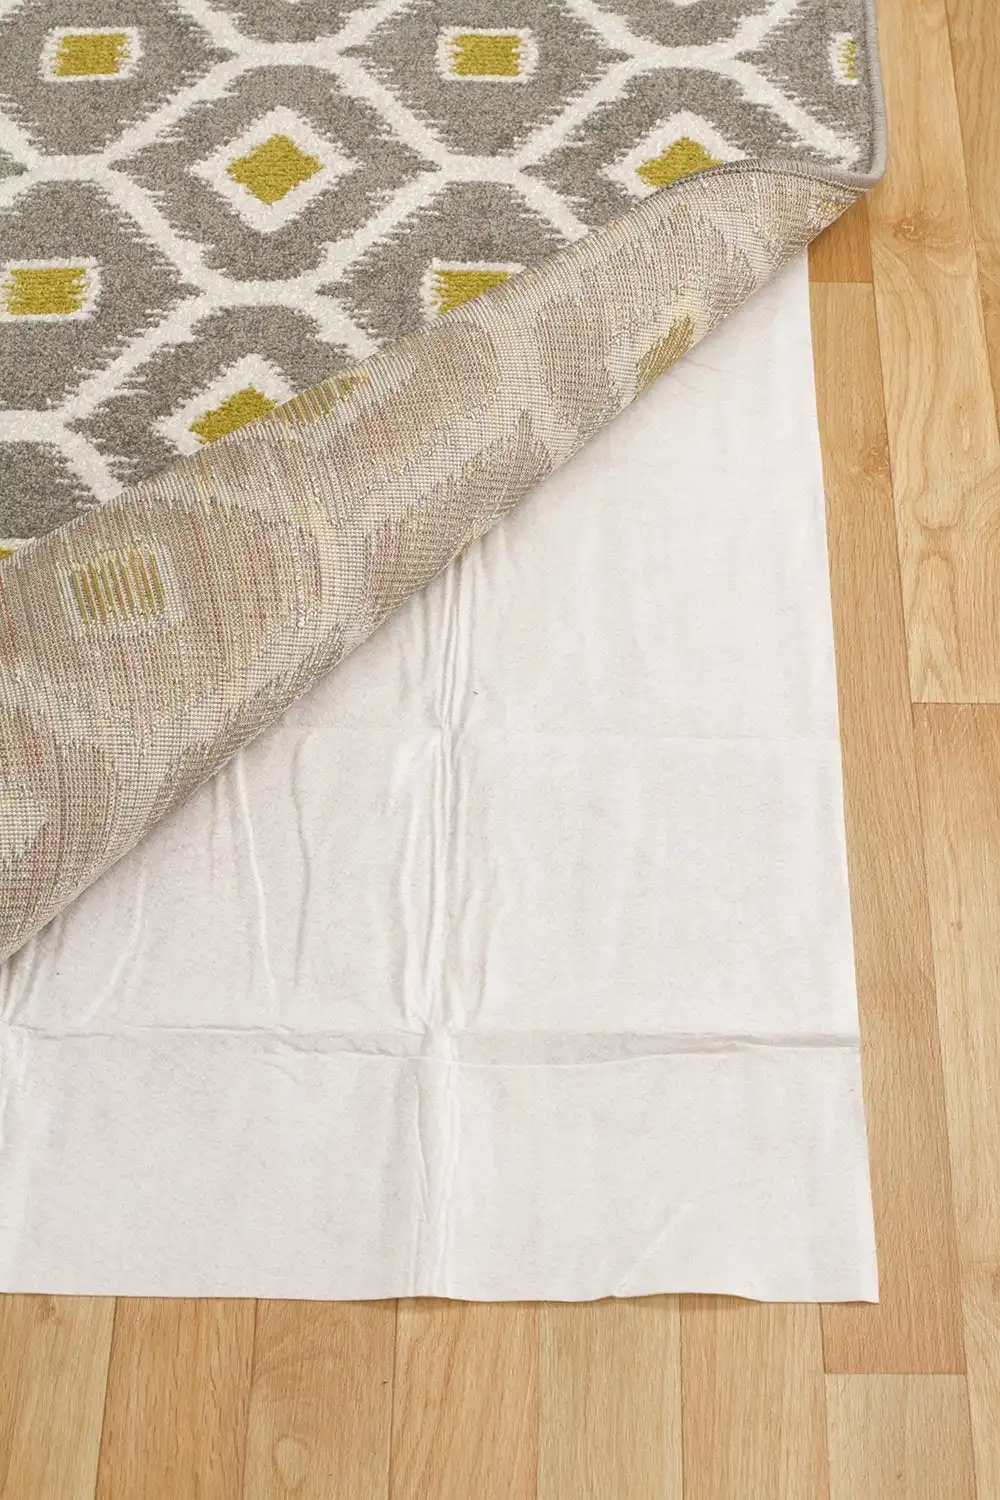 Rug Culture Total Grip for Carpet Floors Rug